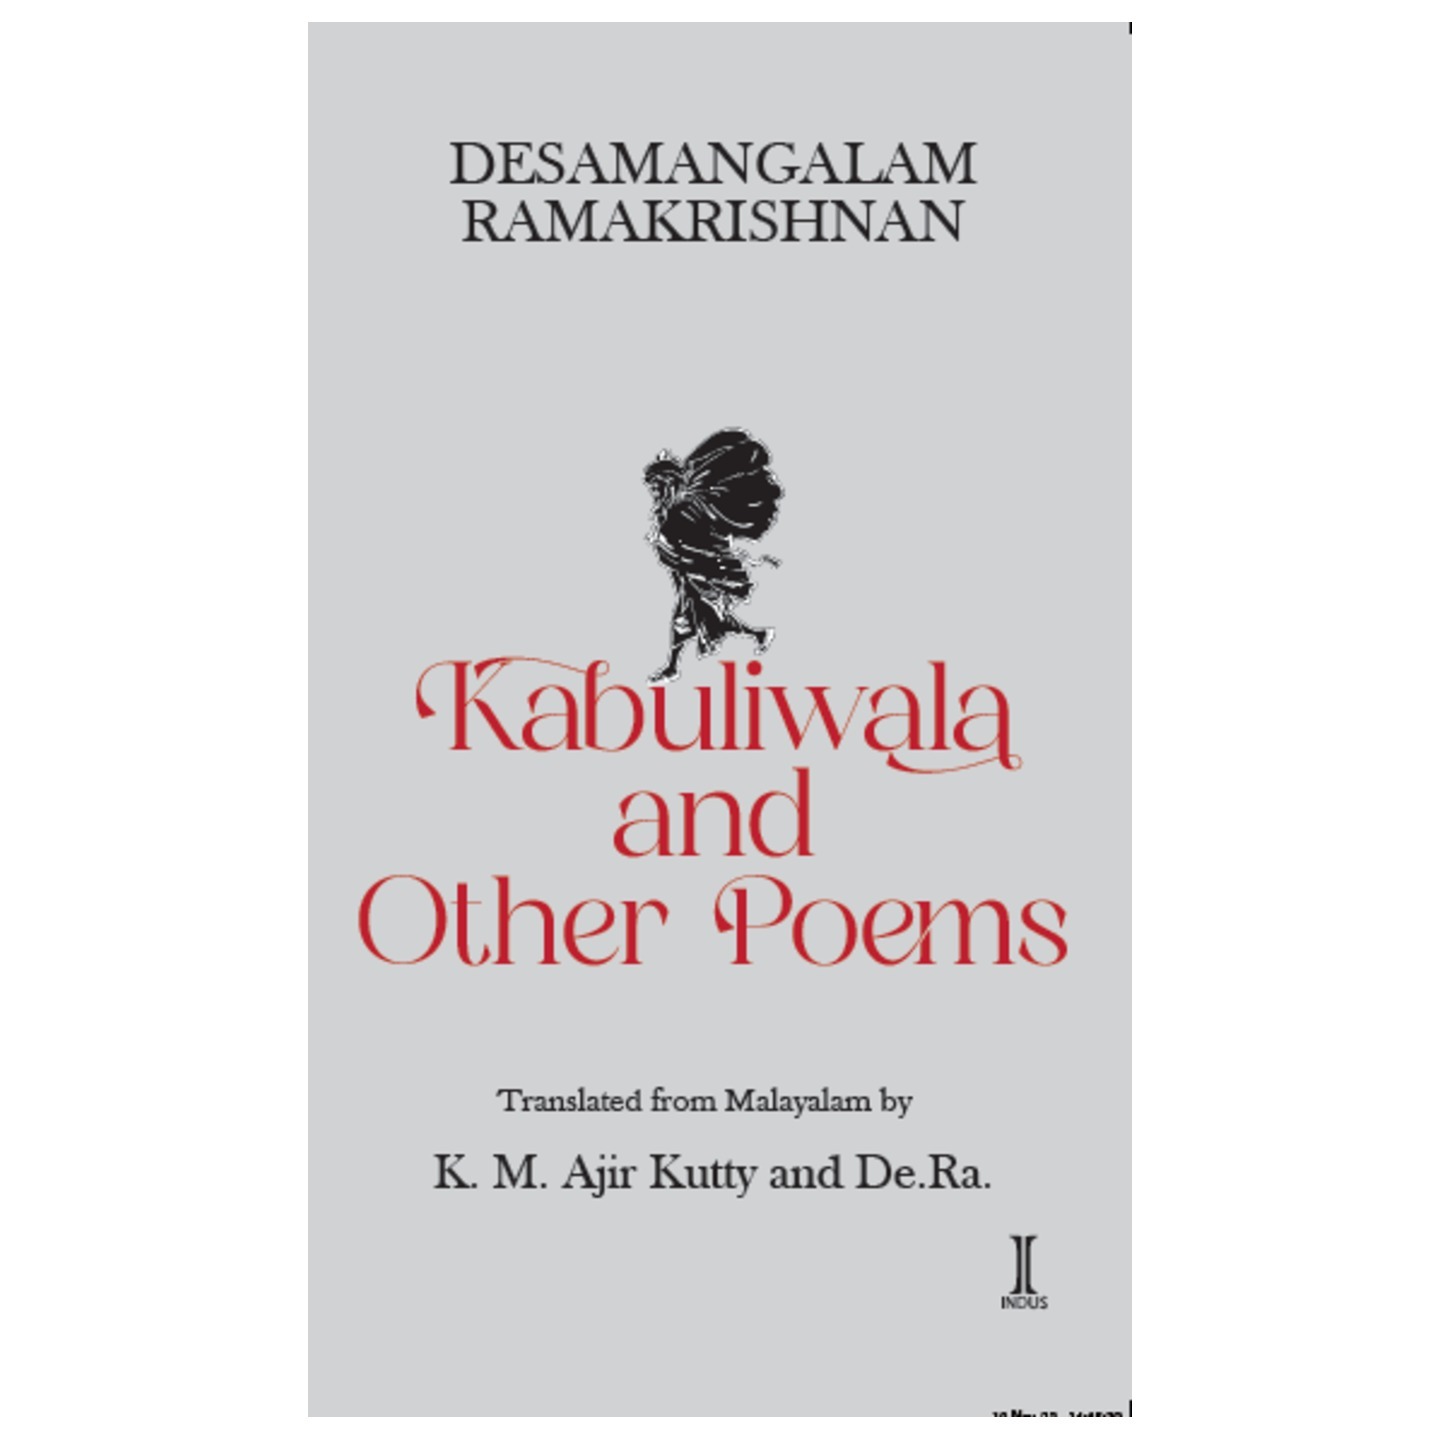 Kabuliwala and Other Poems